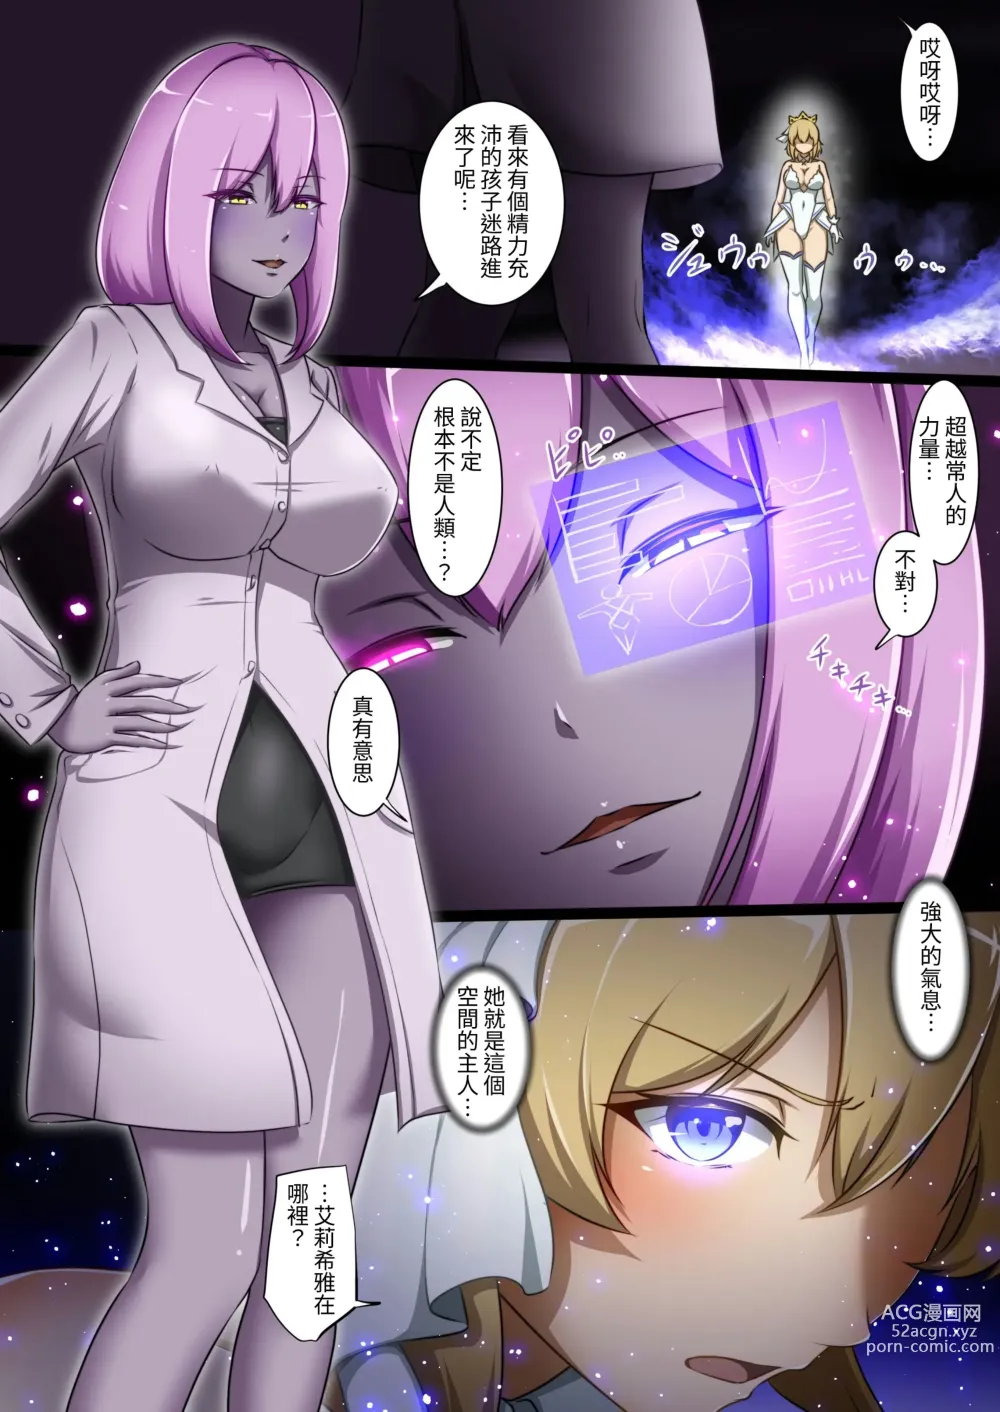 Page 5 of doujinshi 新人女神与色色敌人战斗并败北的故事